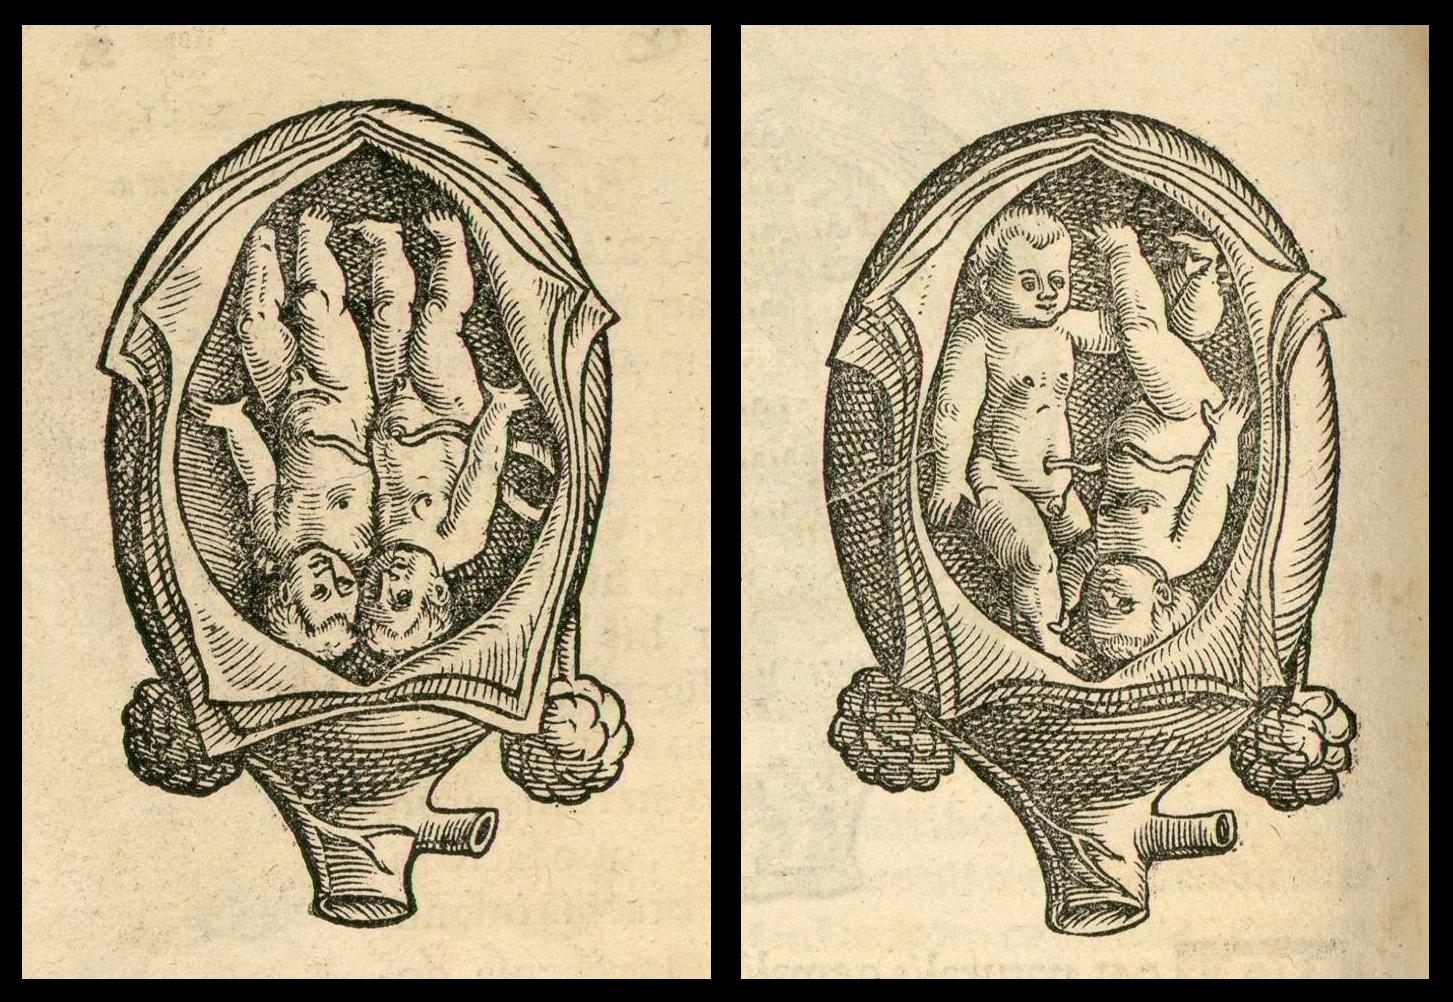 twin fetus positions in uterus (Rueff, 1554)